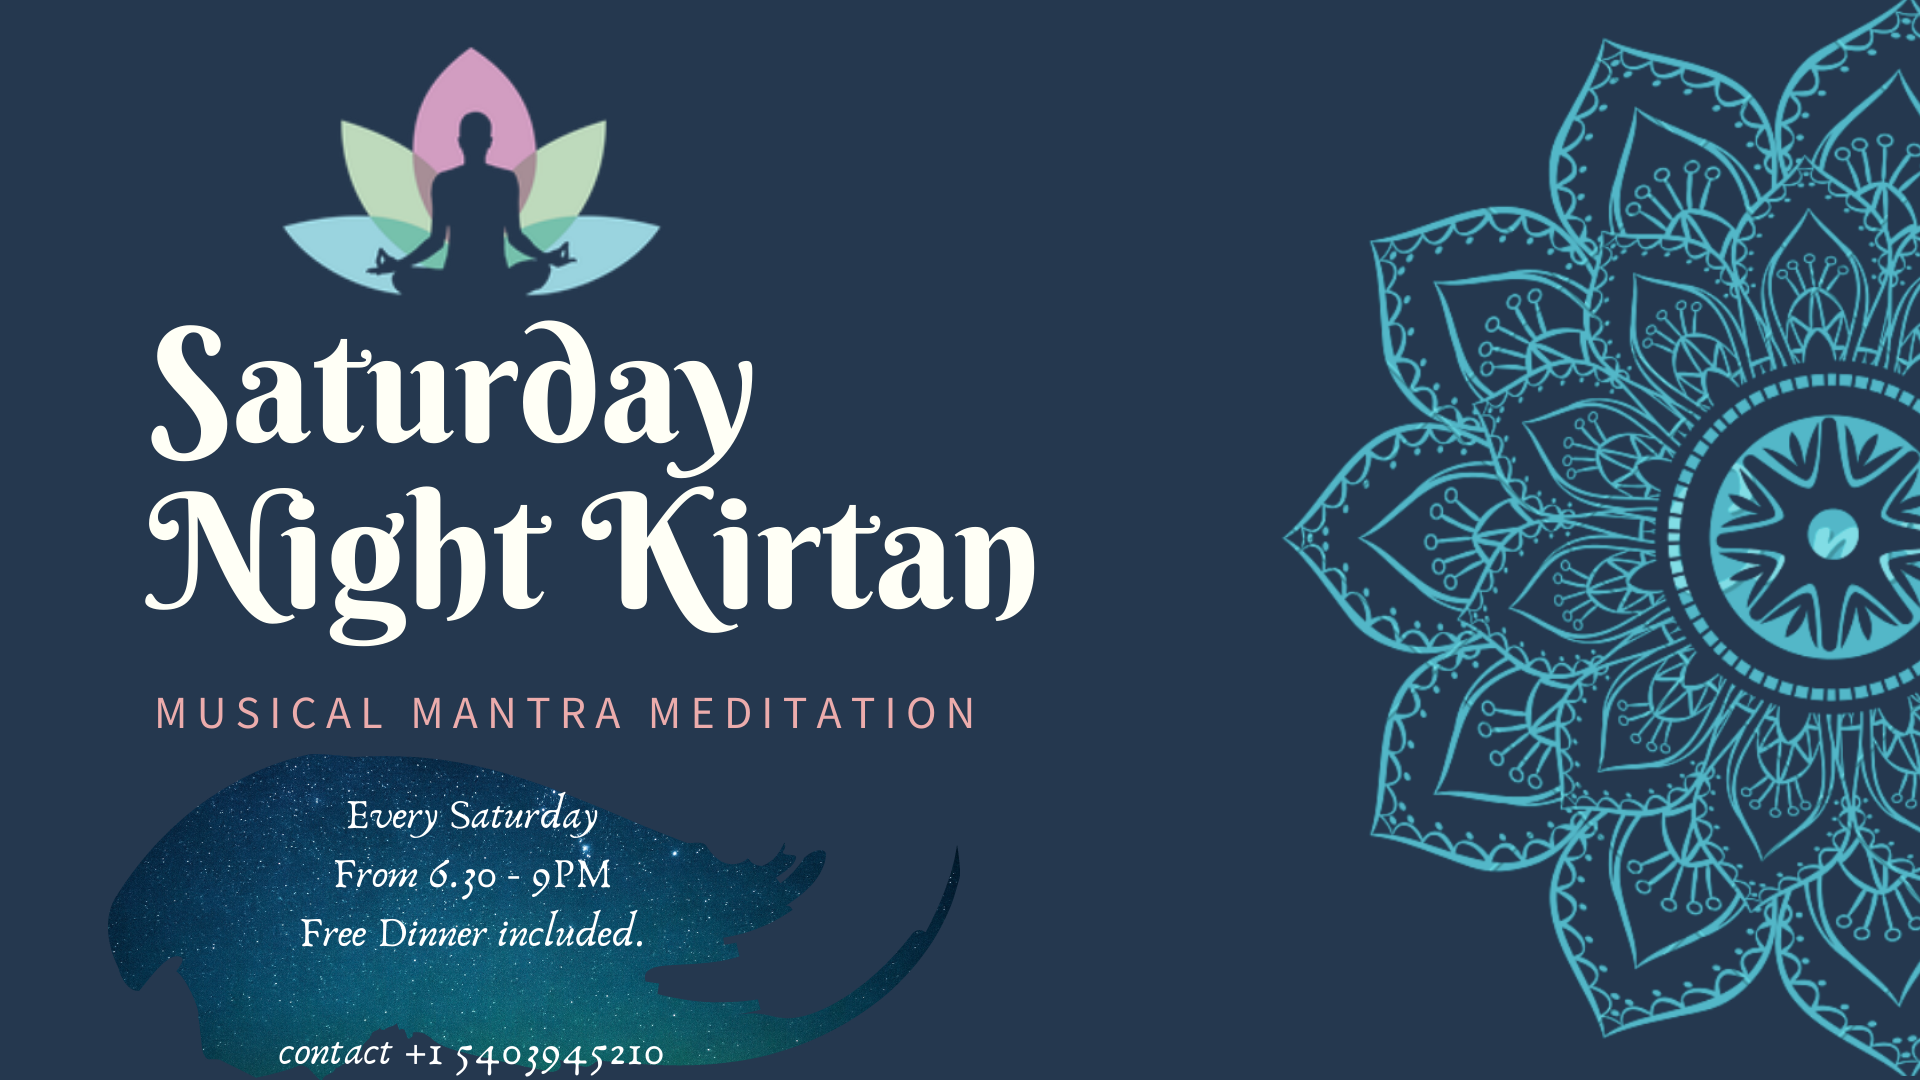 Saturday Night Kirtan - Musical Mantra Meditation